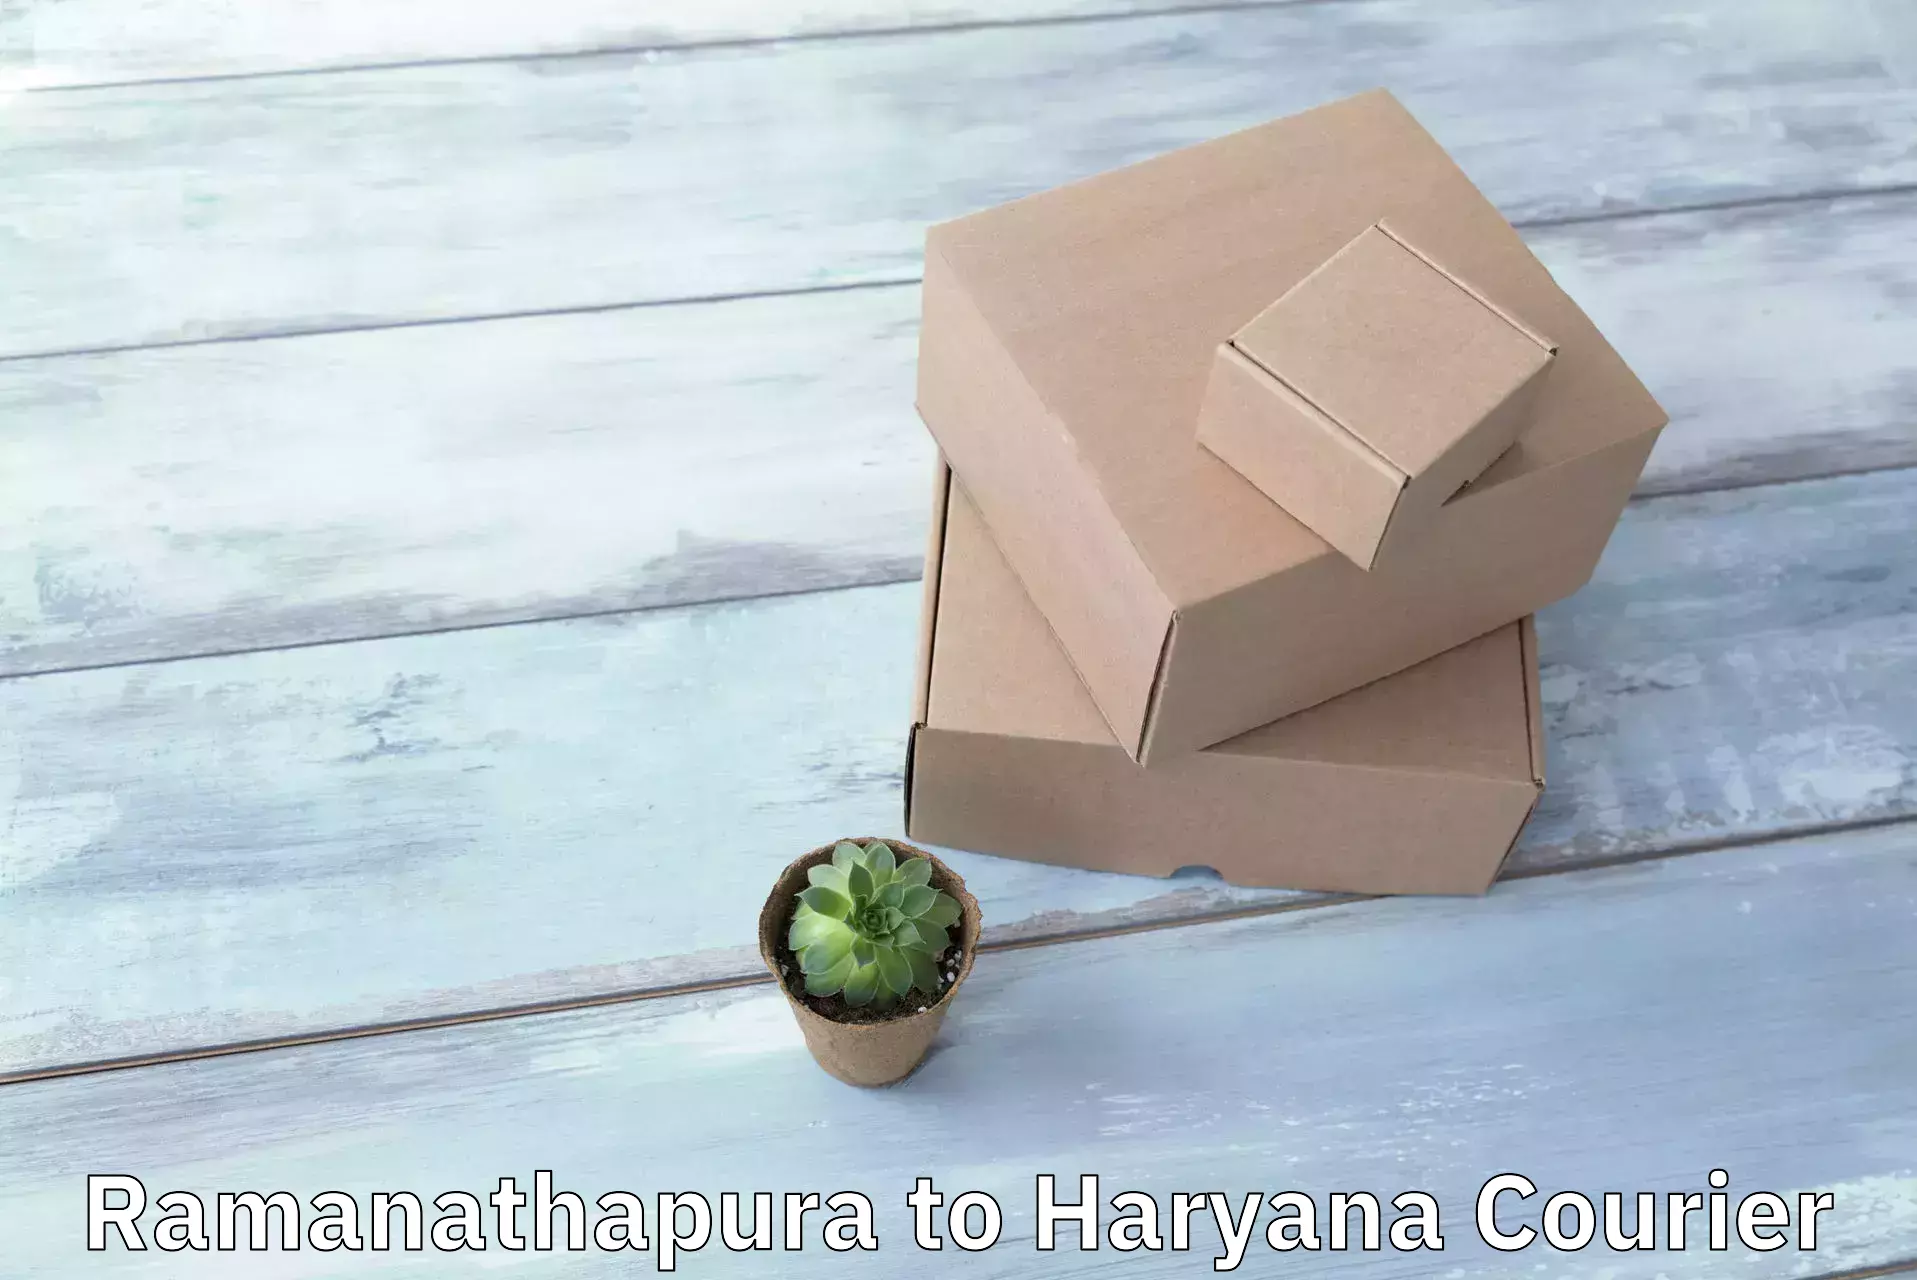 Professional courier handling Ramanathapura to Haryana